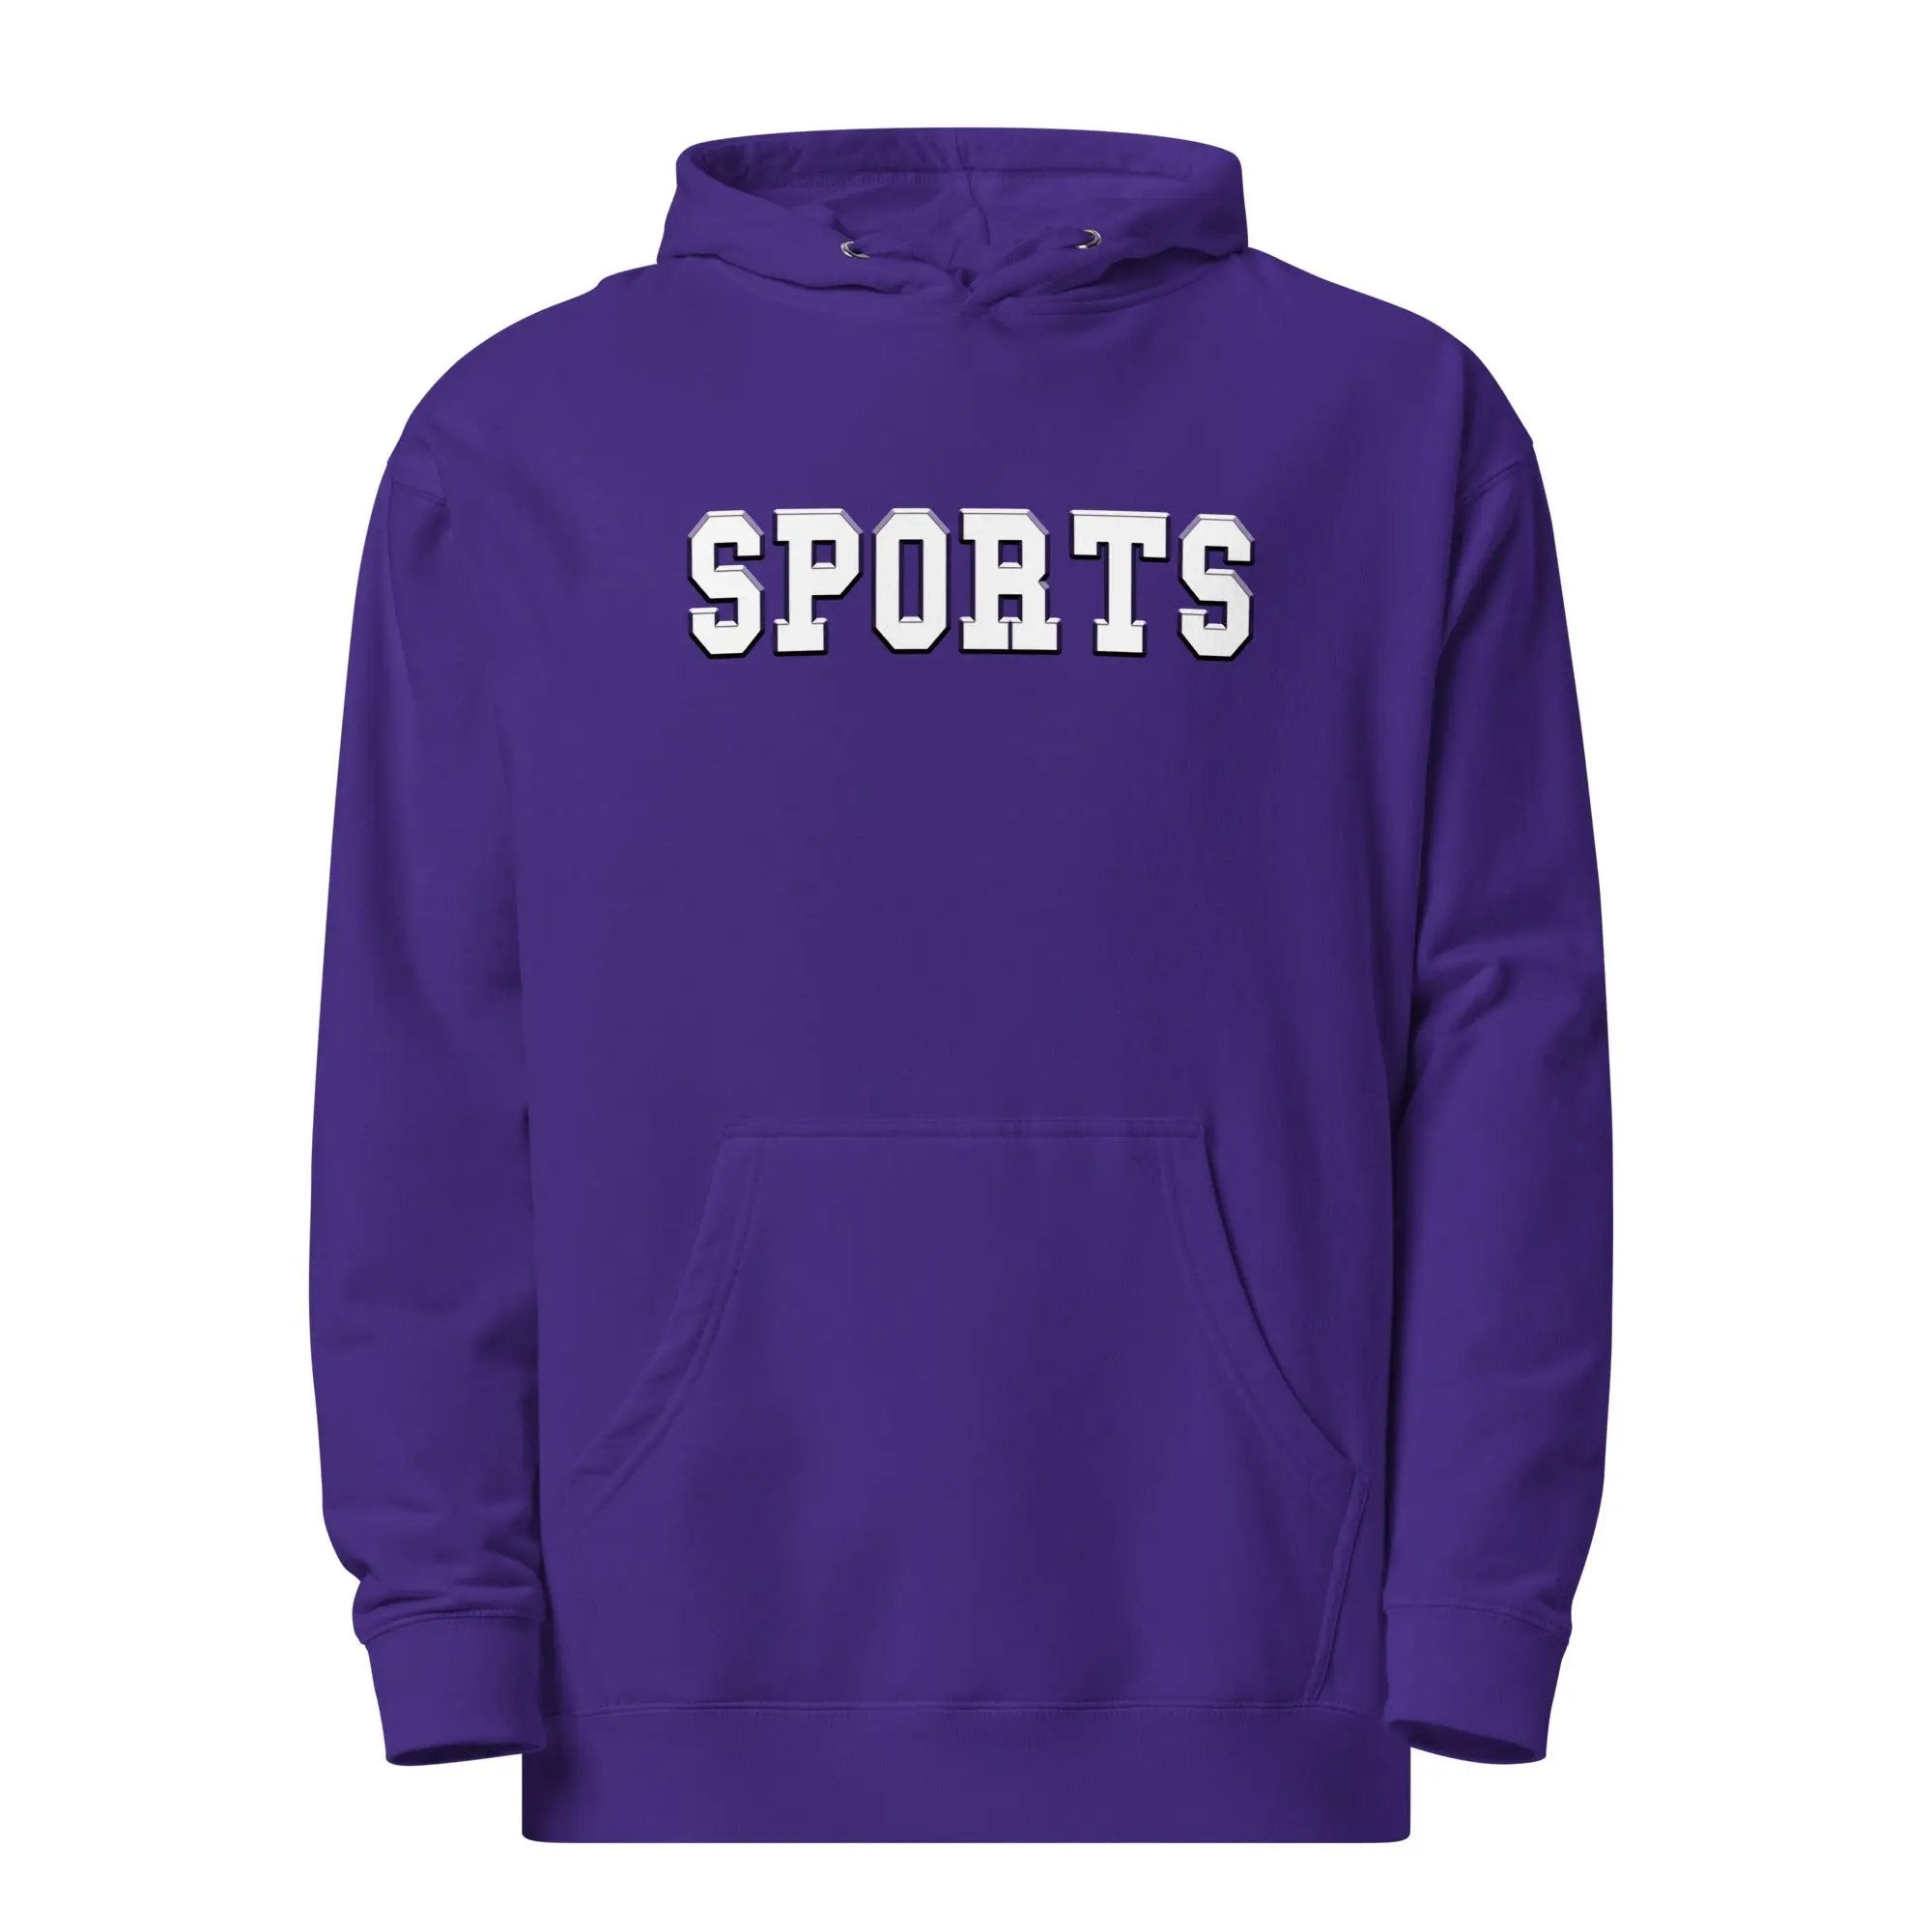 SPORTS! Unisex midweight hoodie